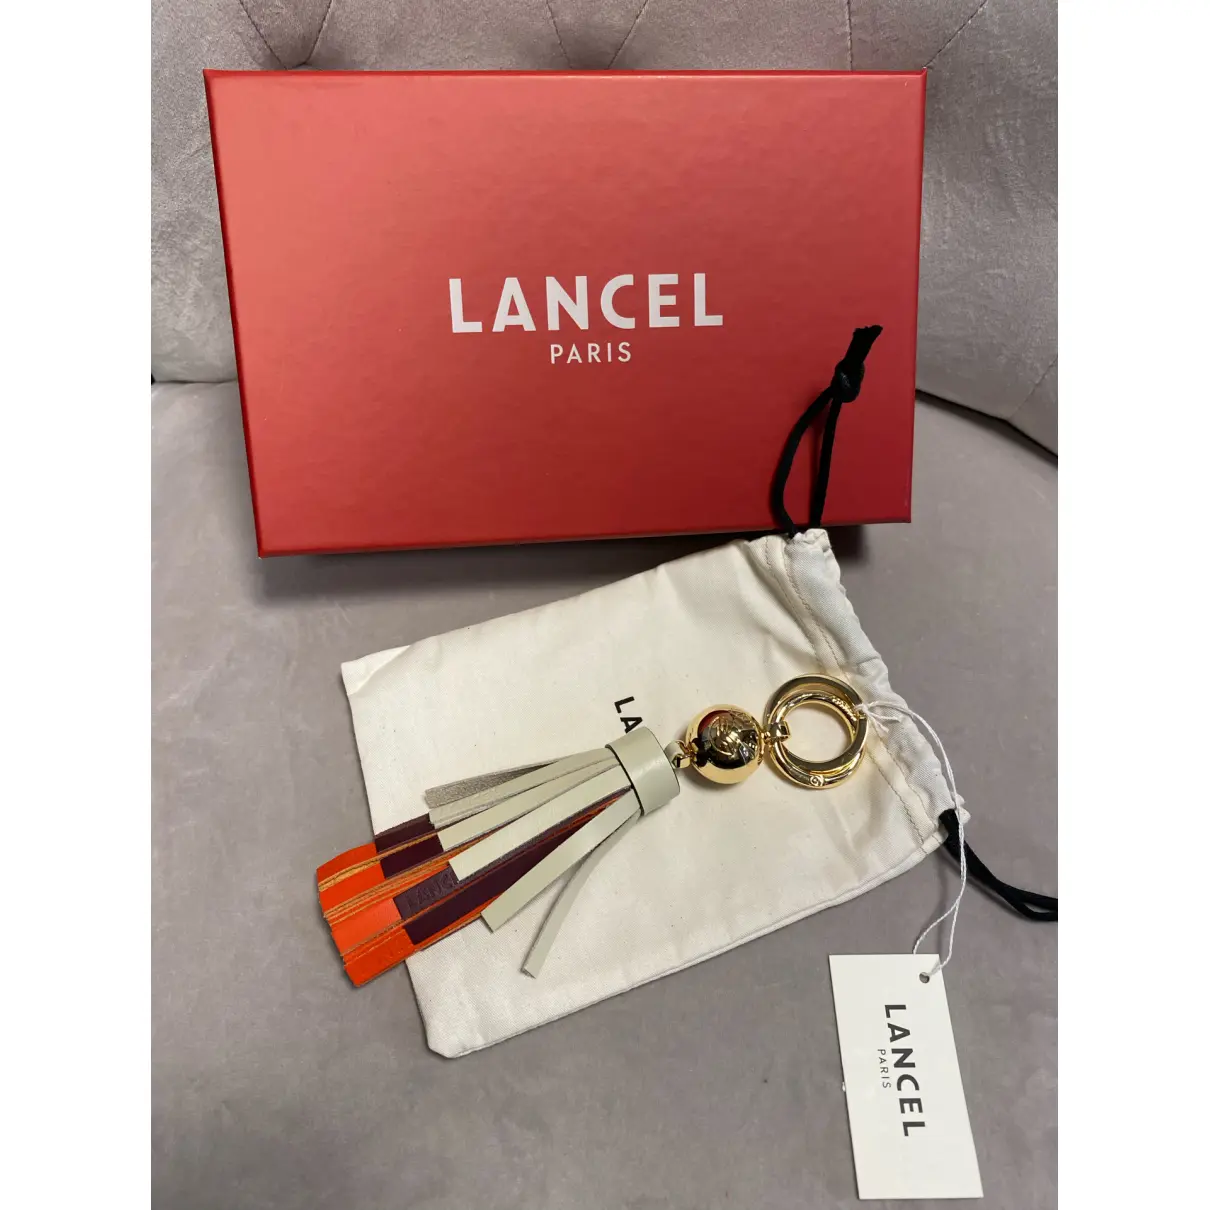 Buy Lancel Leather bag charm online